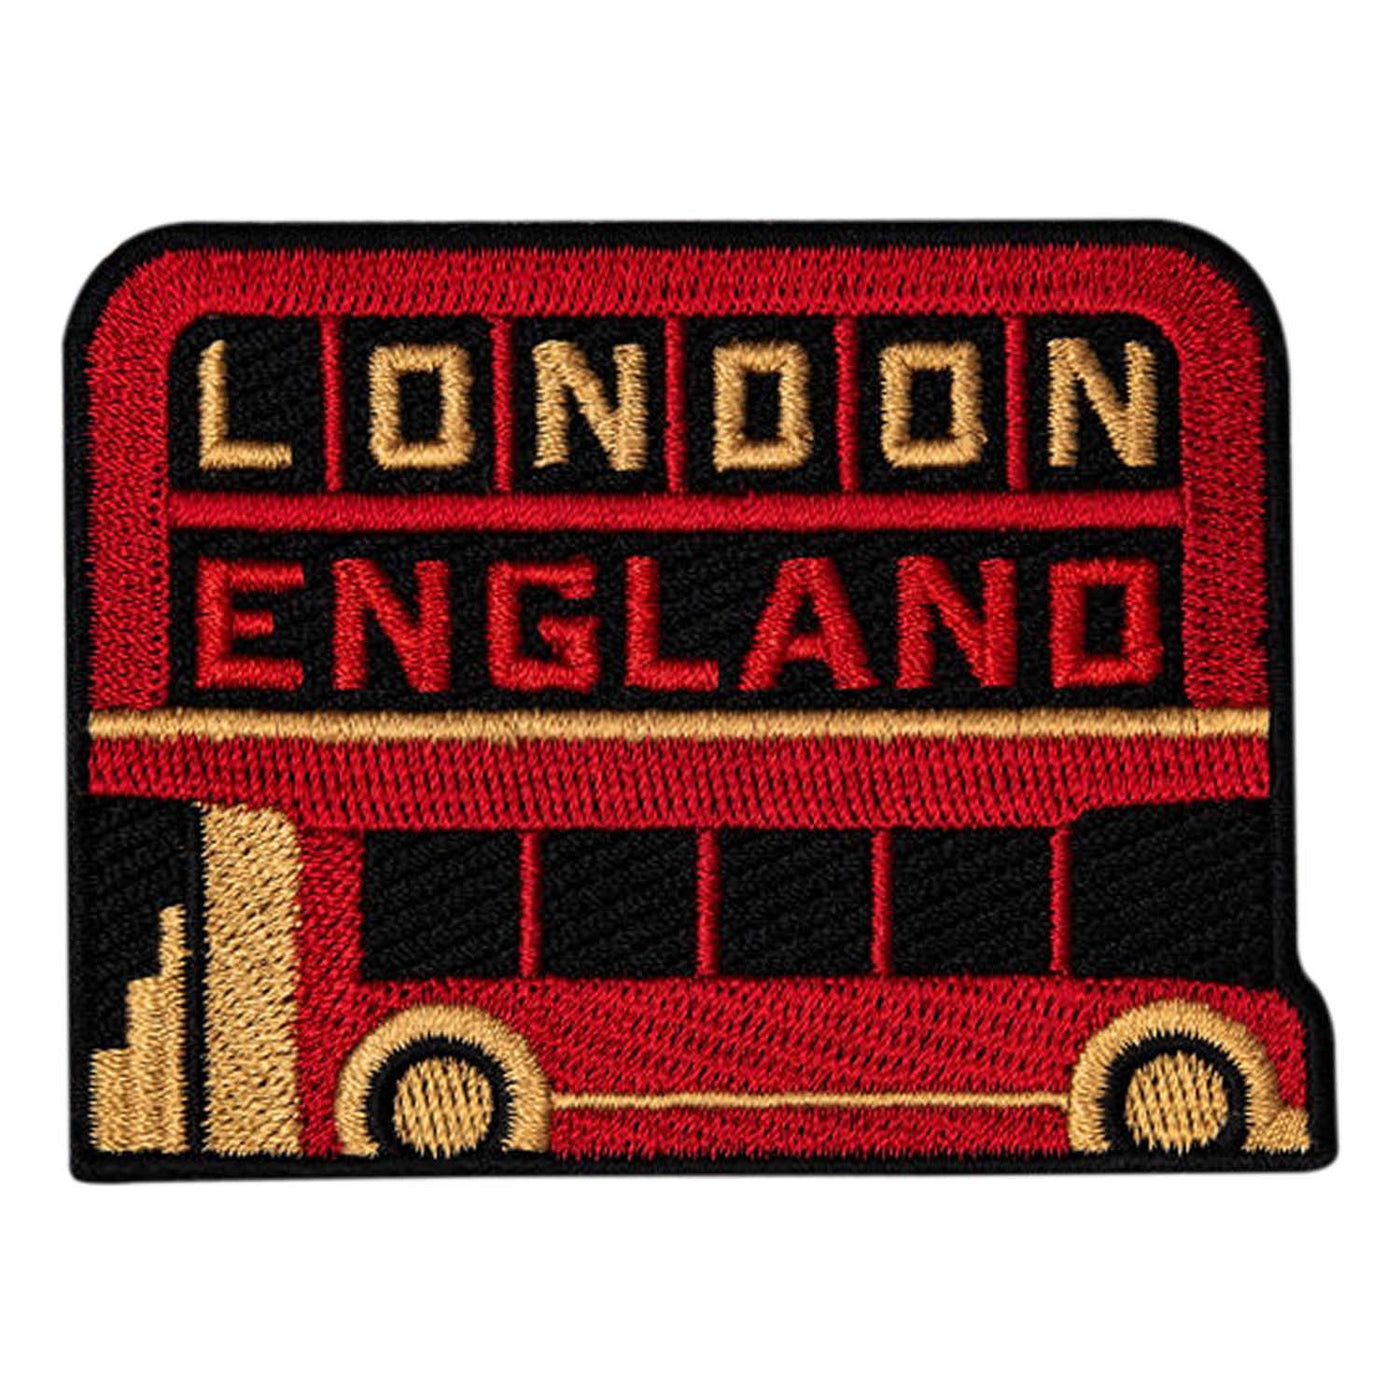 London England Patch